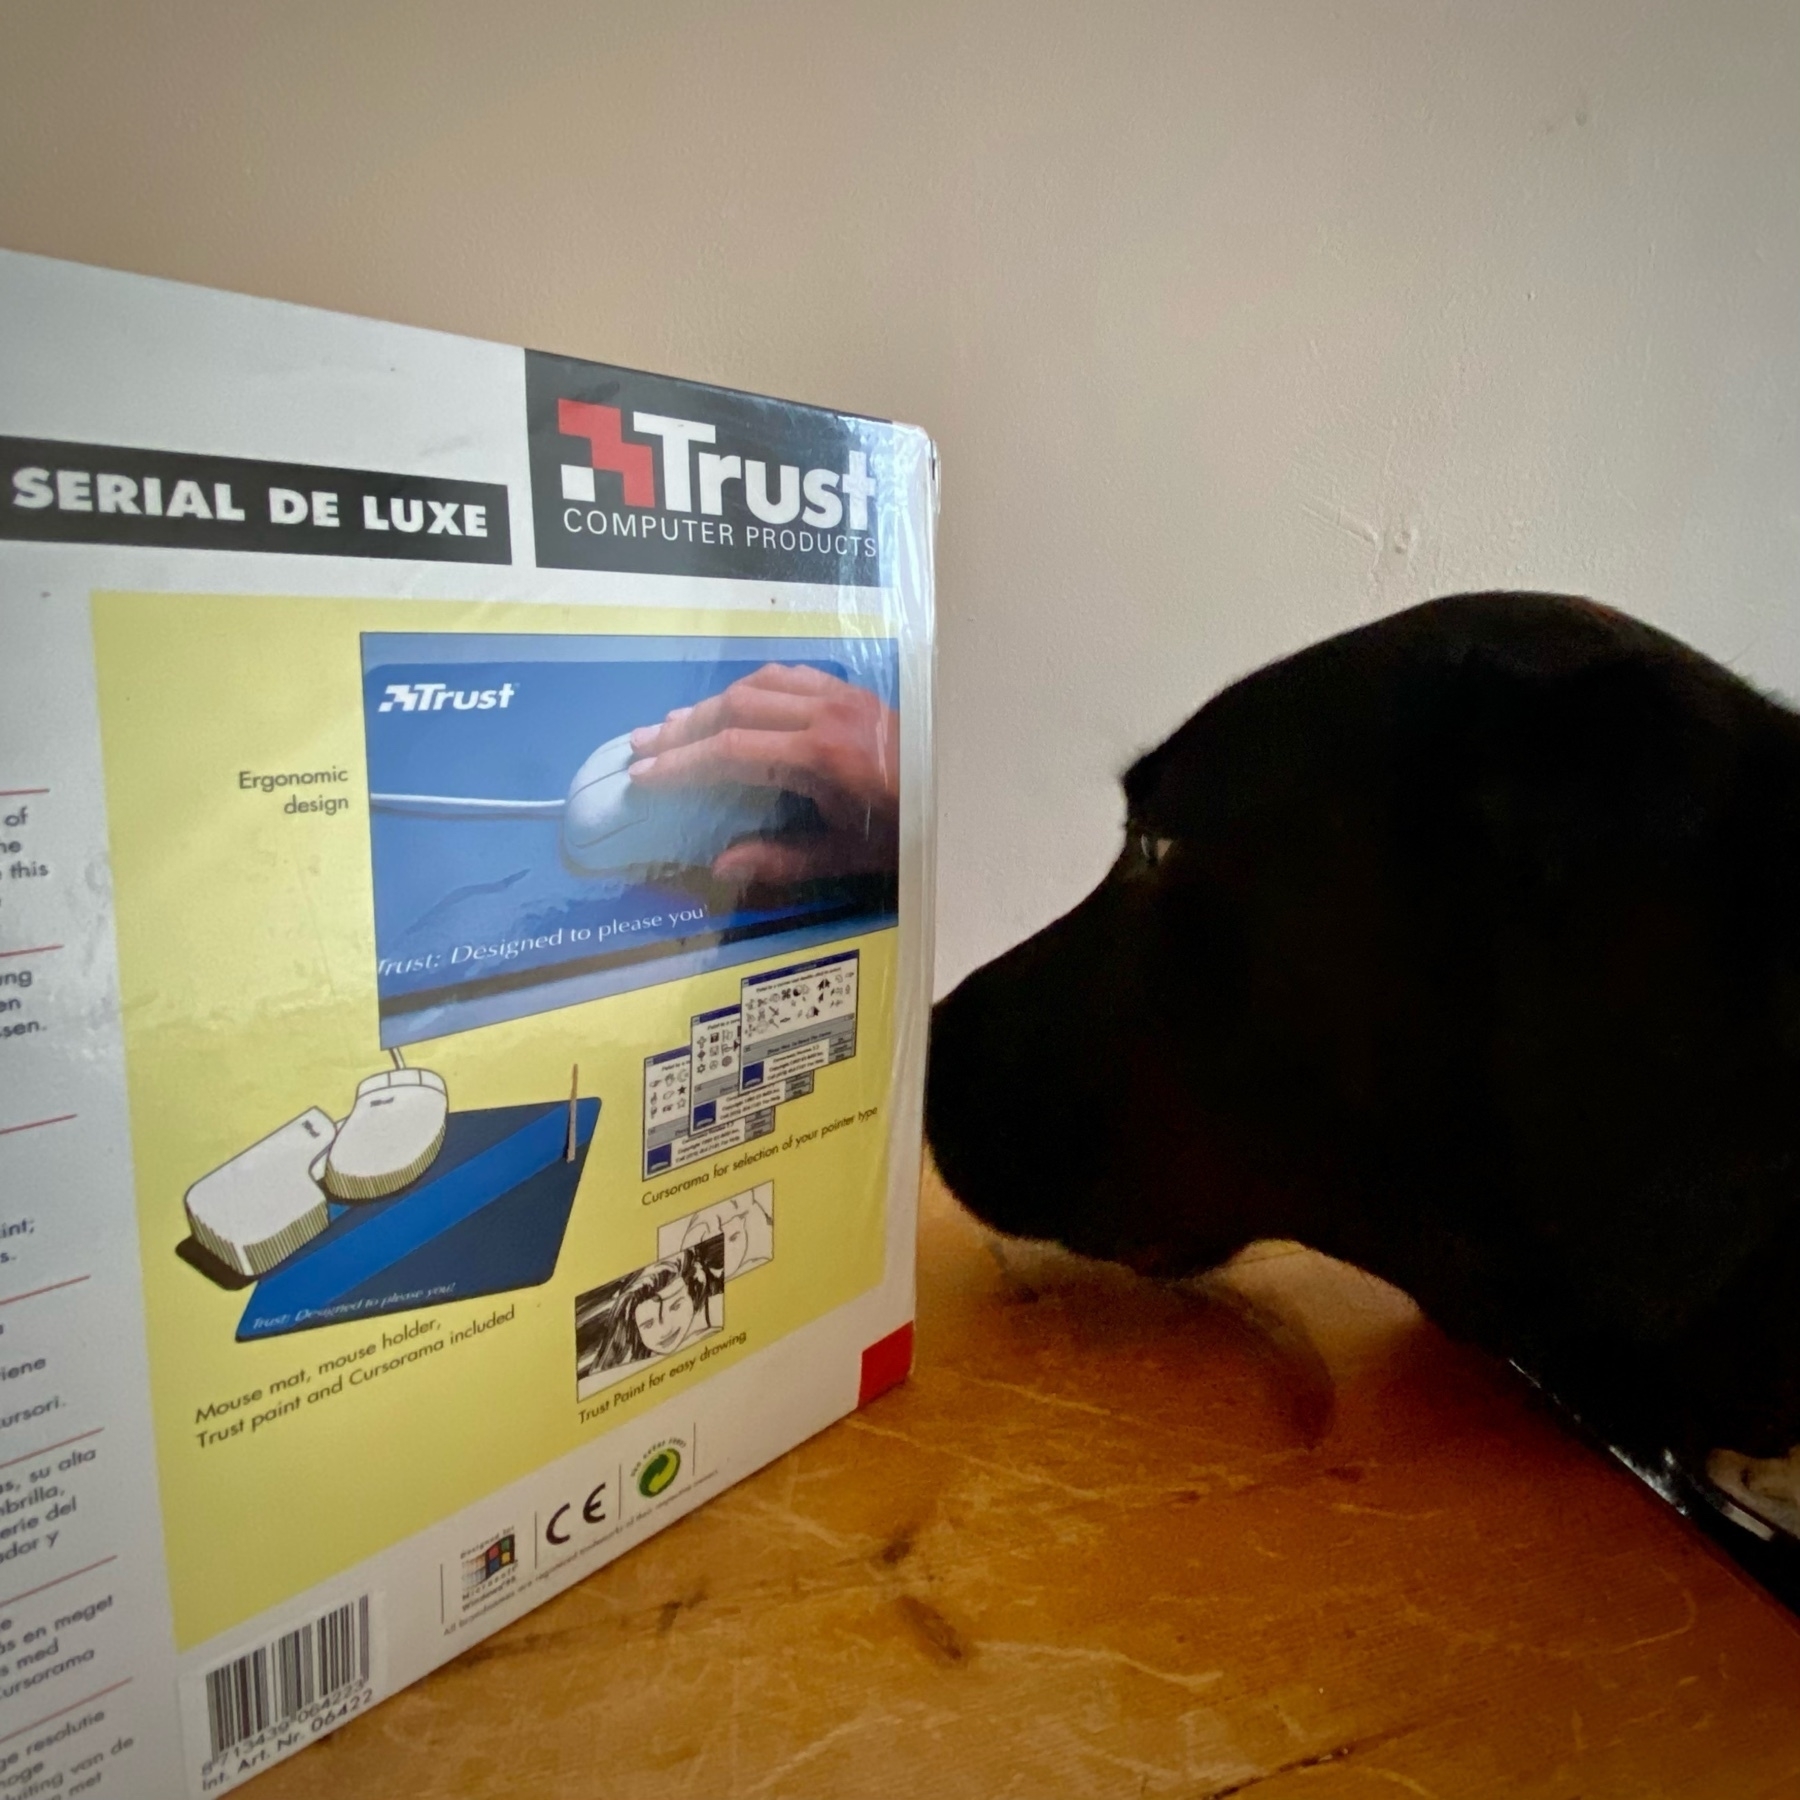 a black Labrador dog sniffs the box with suspicion 